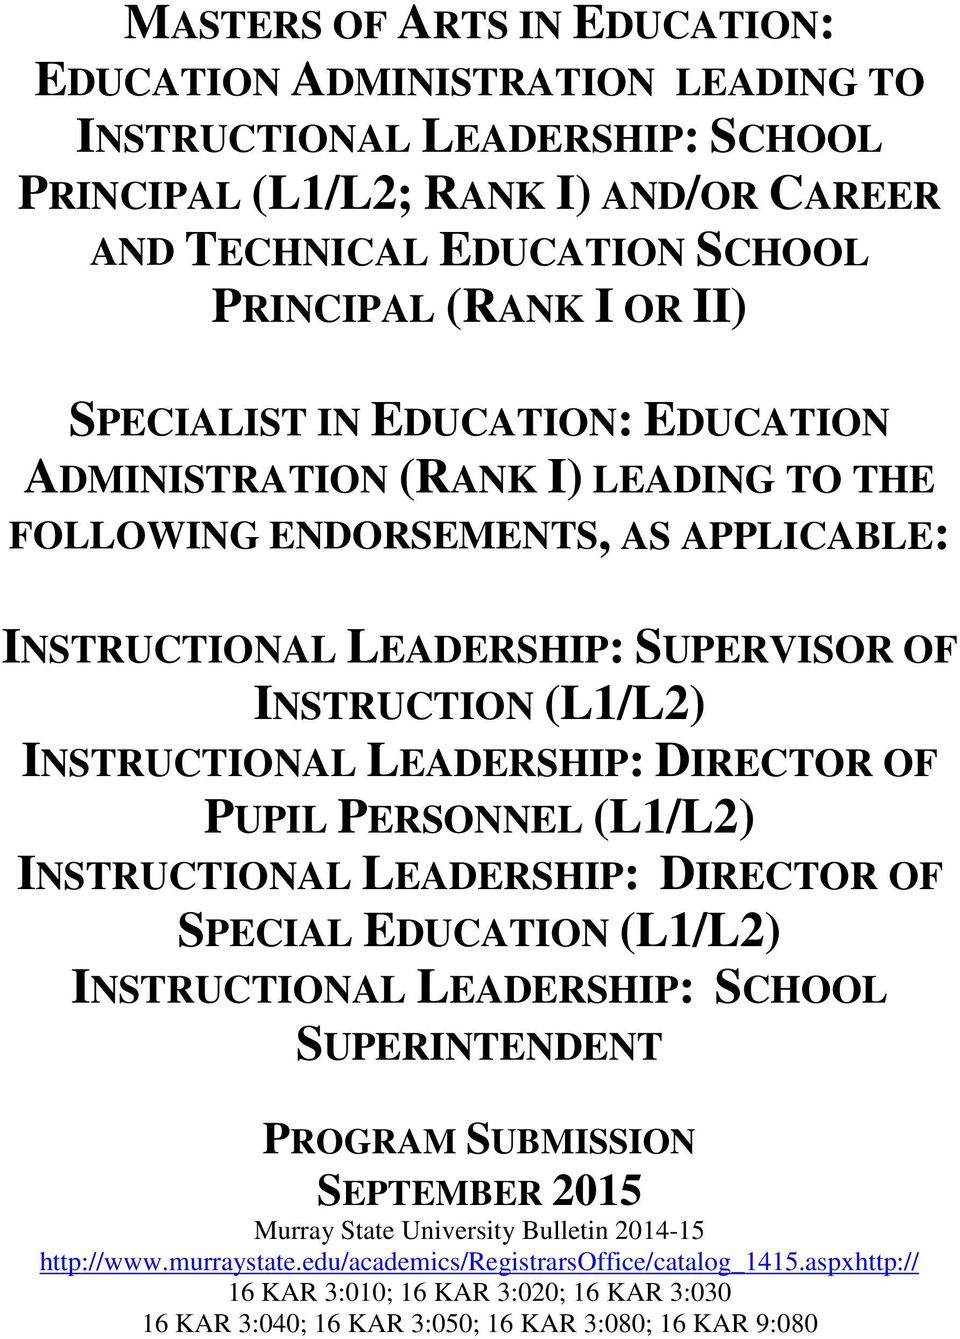 LEADERSHIP: DIRECTOR OF PUPIL PERSONNEL (L1/L2) INSTRUCTIONAL LEADERSHIP: DIRECTOR OF SPECIAL EDUCATION (L1/L2) INSTRUCTIONAL LEADERSHIP: SCHOOL SUPERINTENDENT PROGRAM SUBMISSION SEPTEMBER 2015